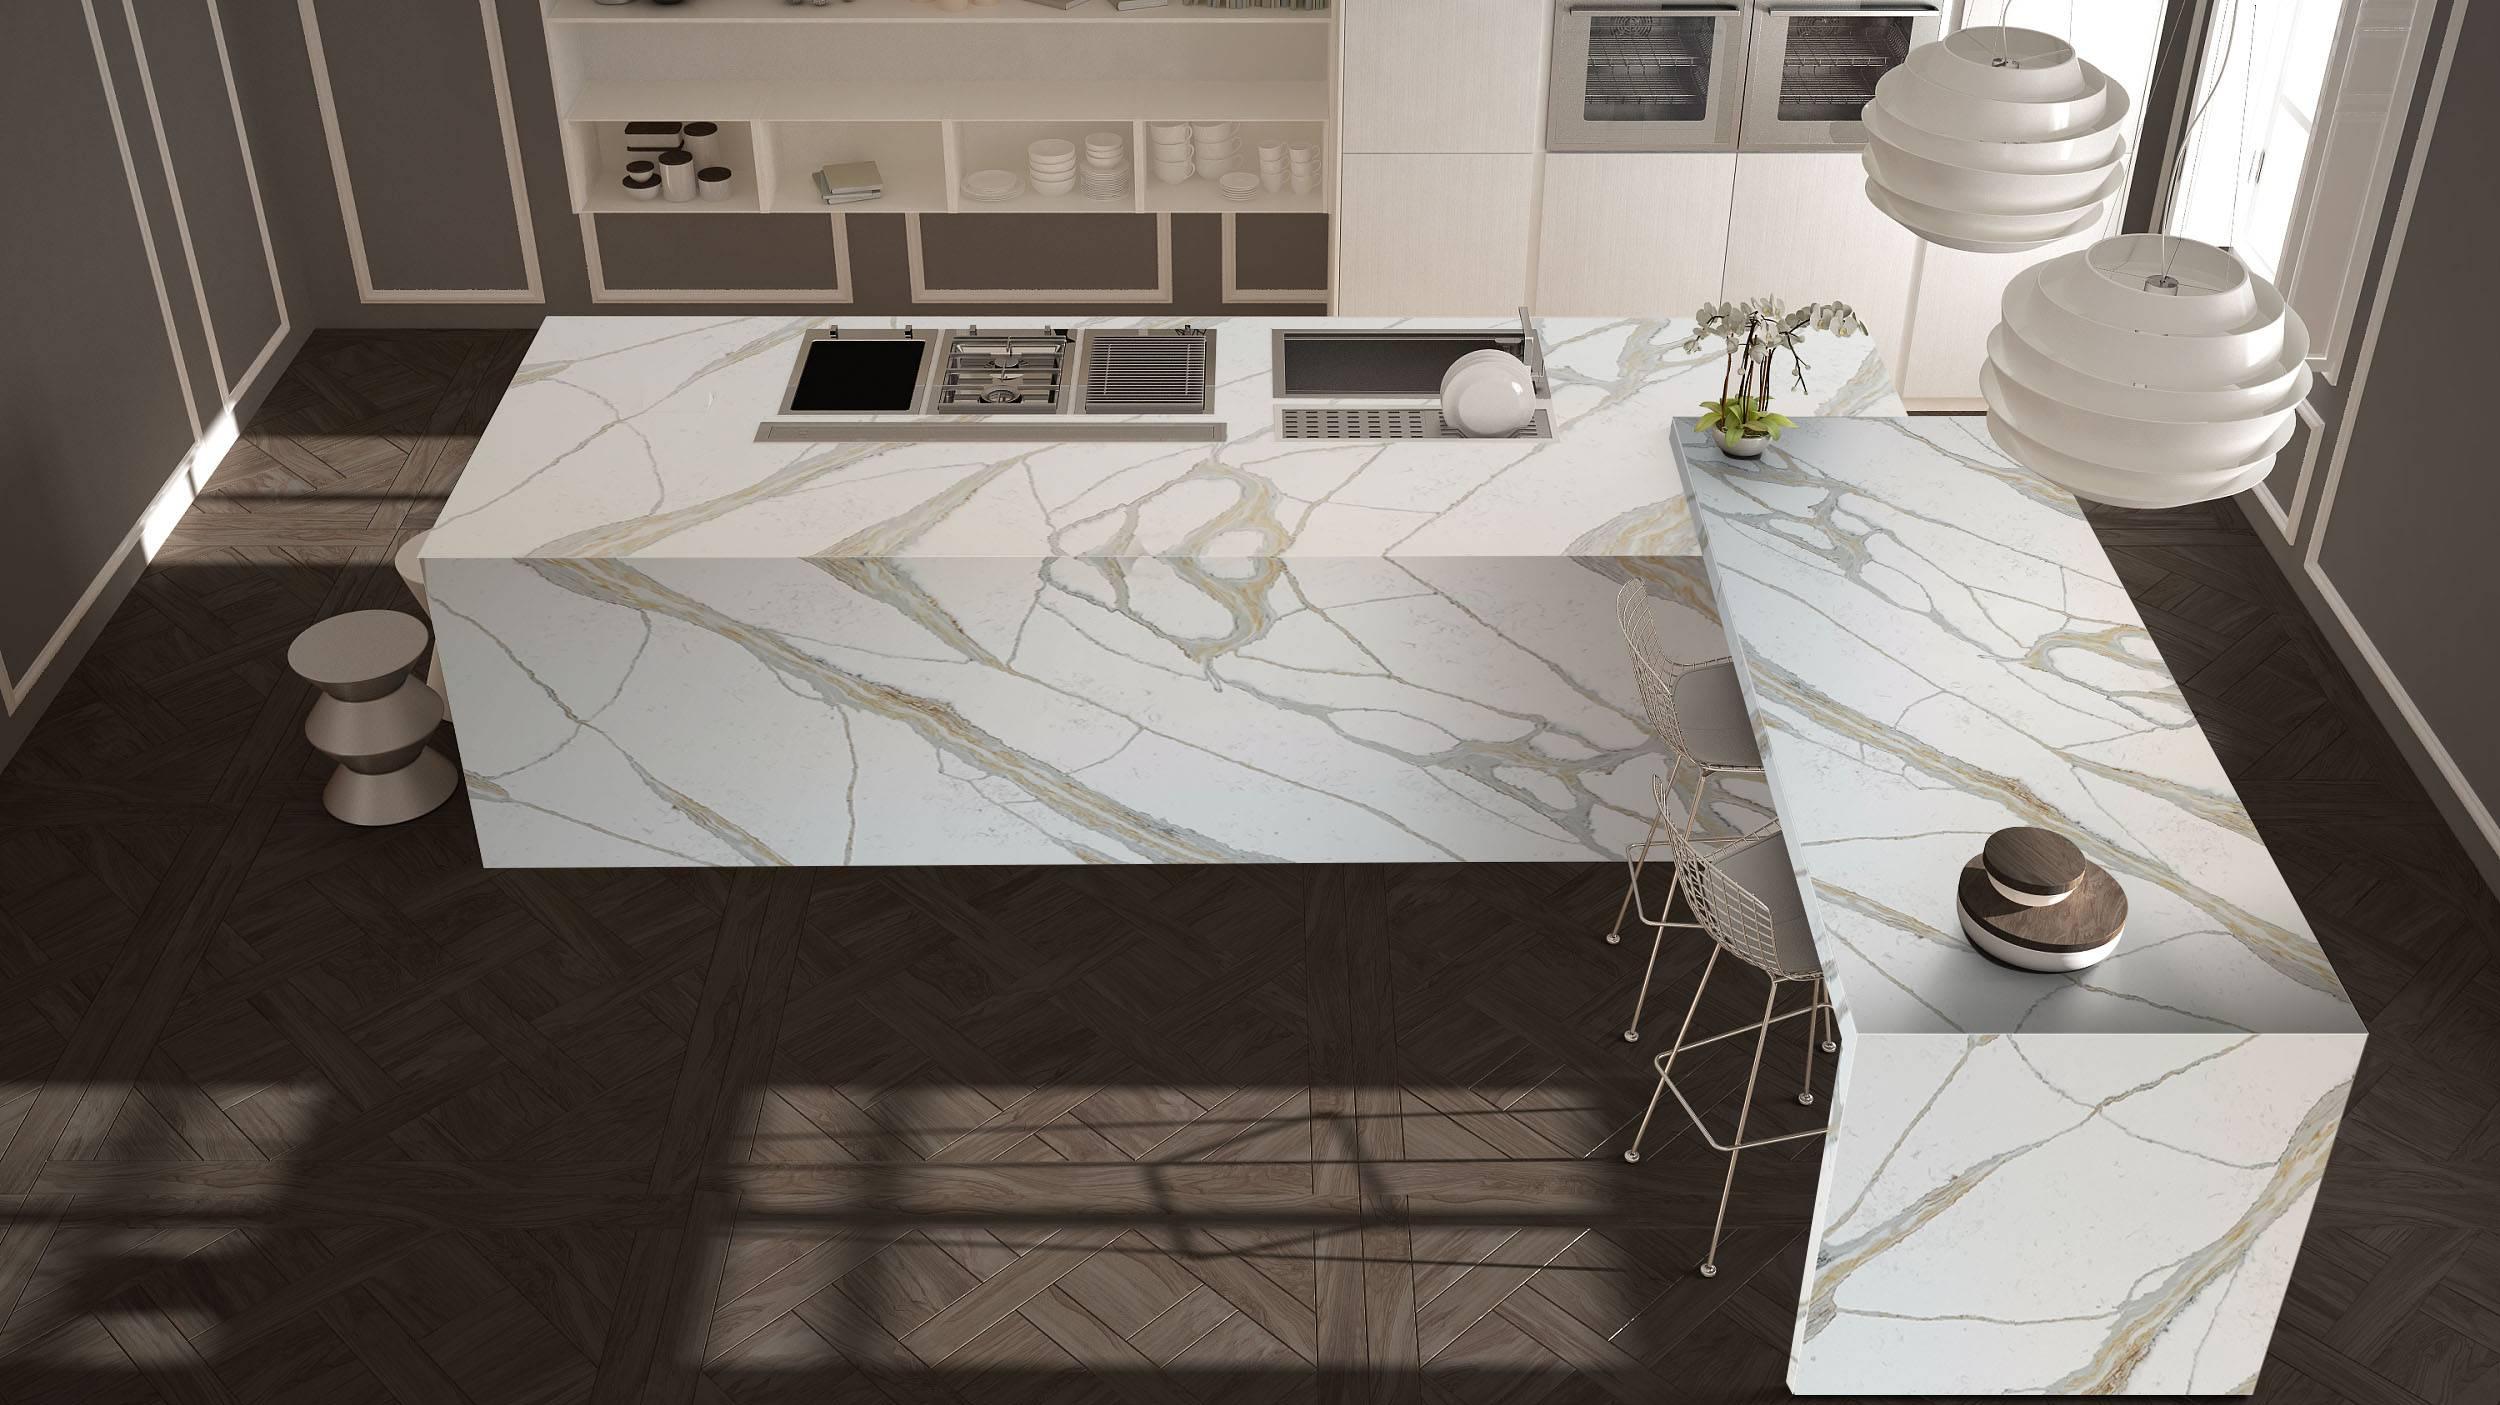 Calacatta Borghini quartz kitchen countertops